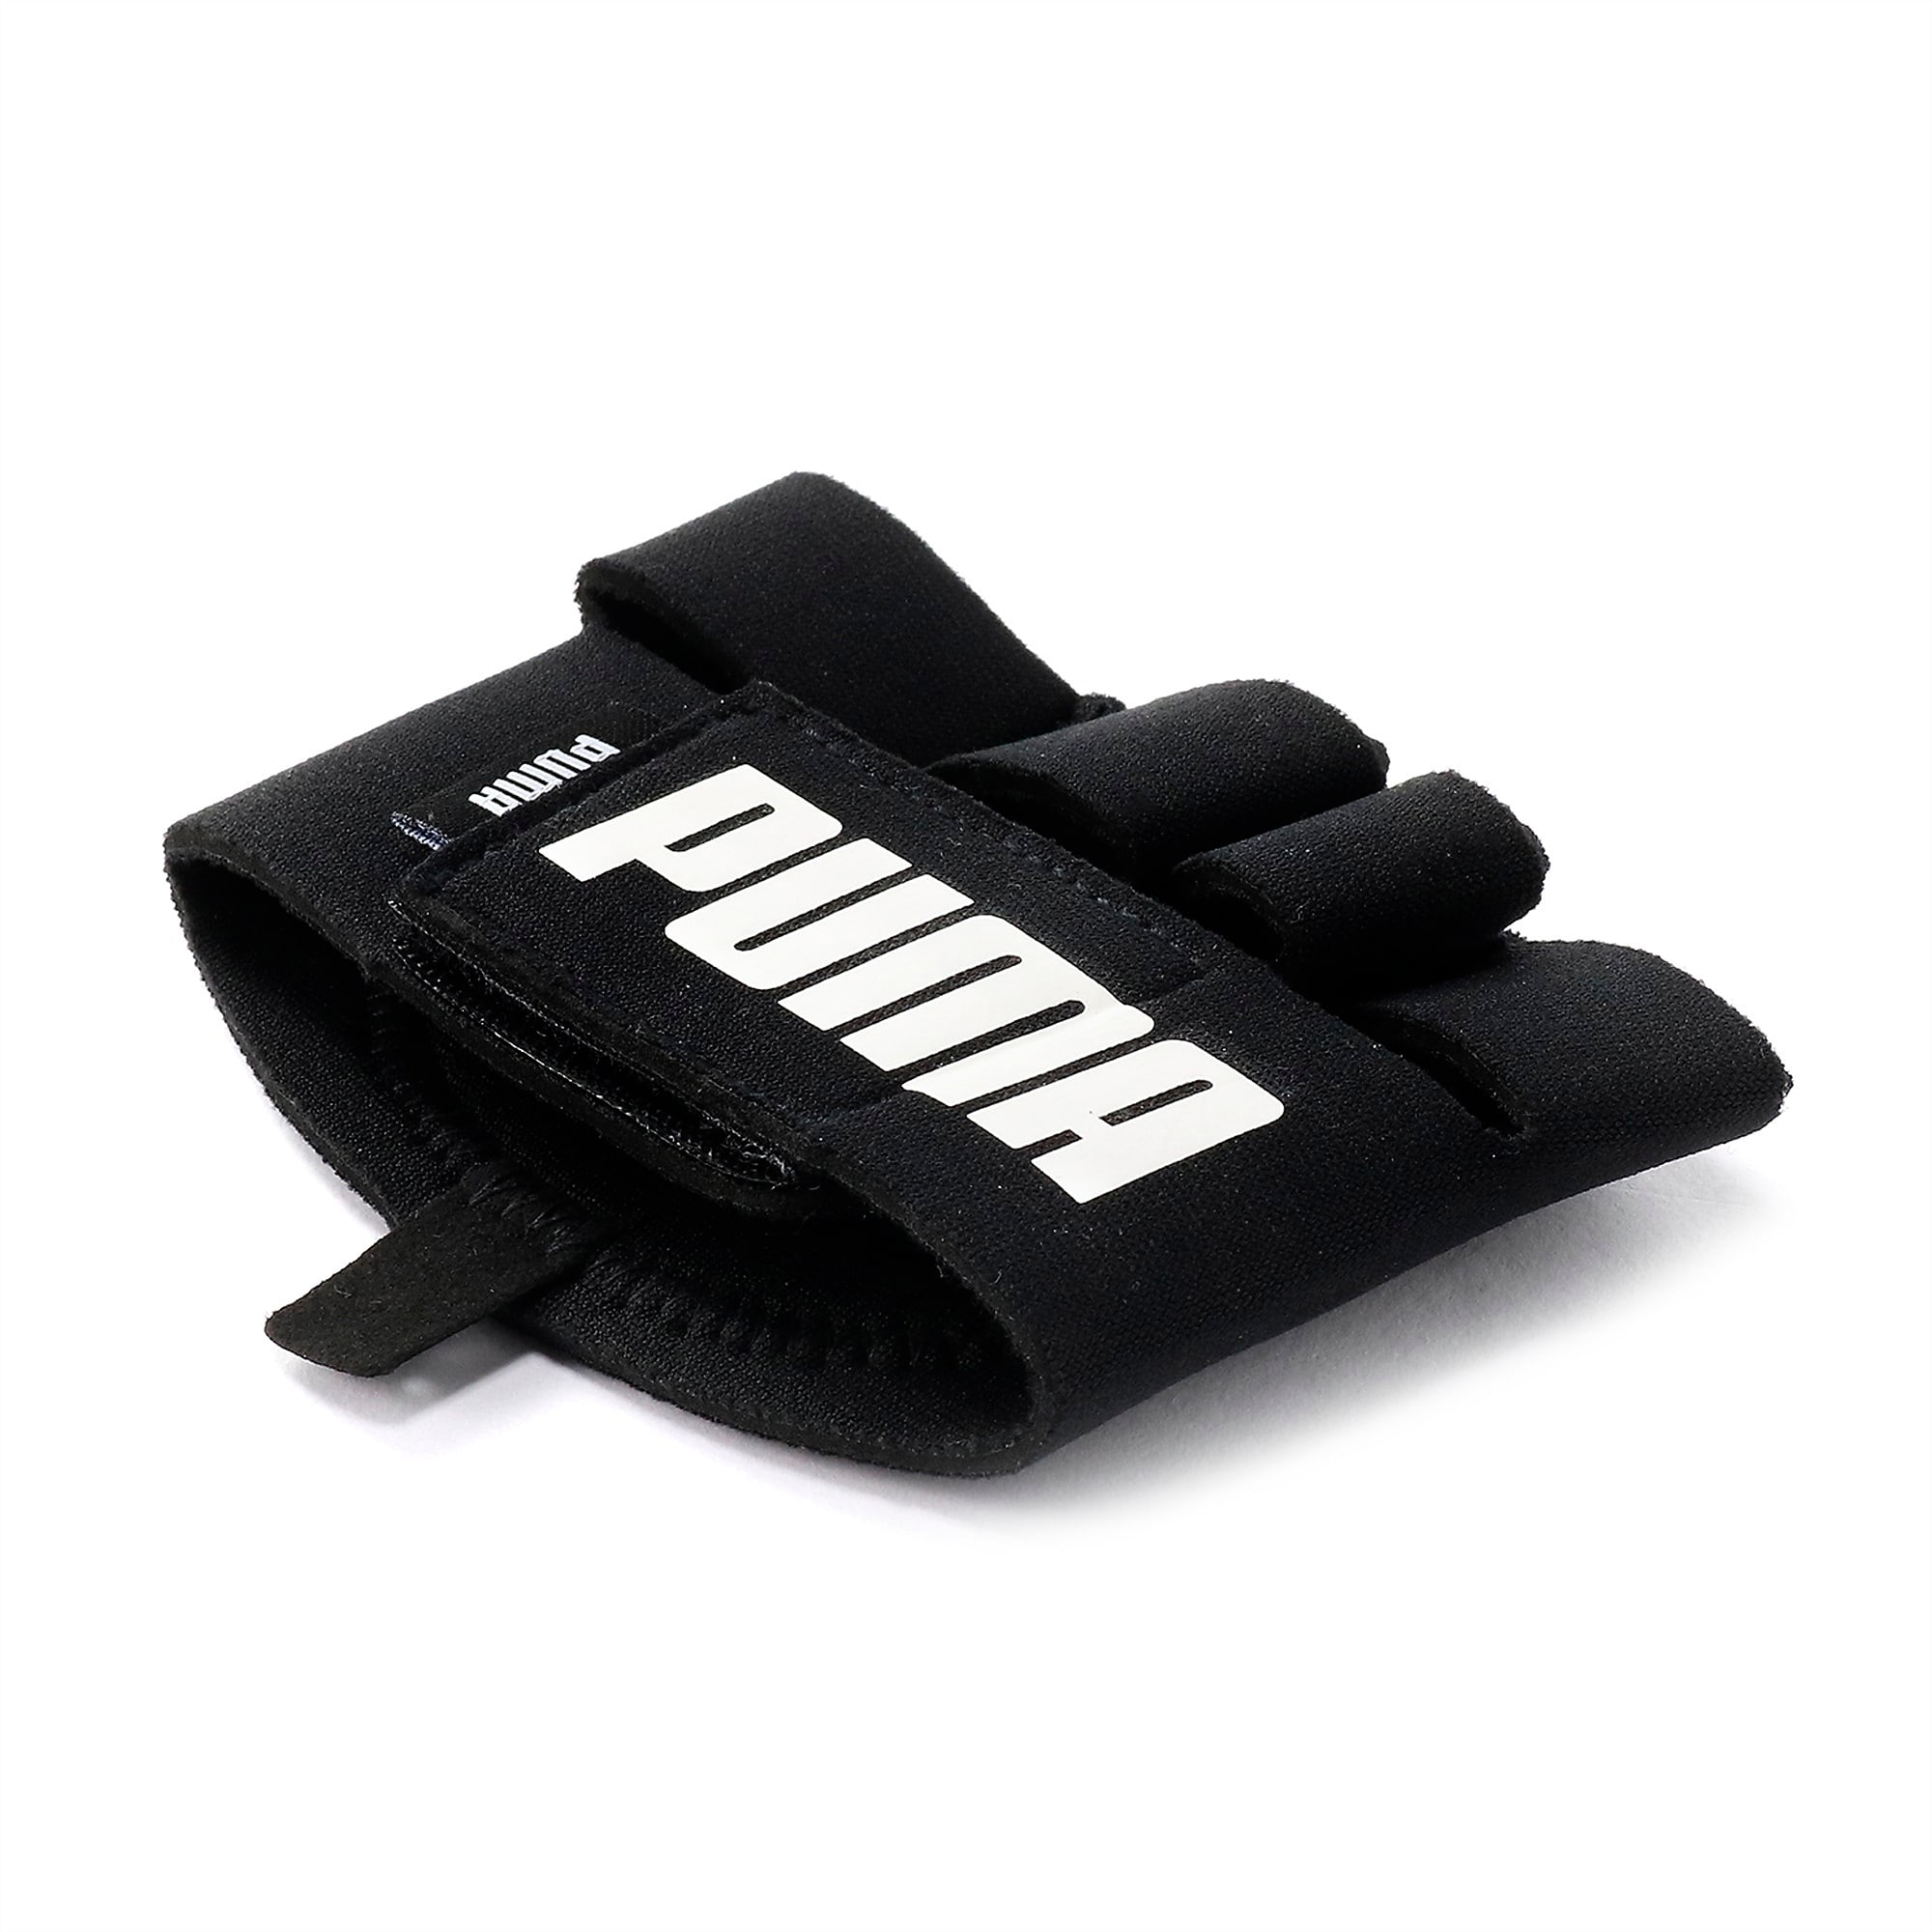 puma training grip gloves